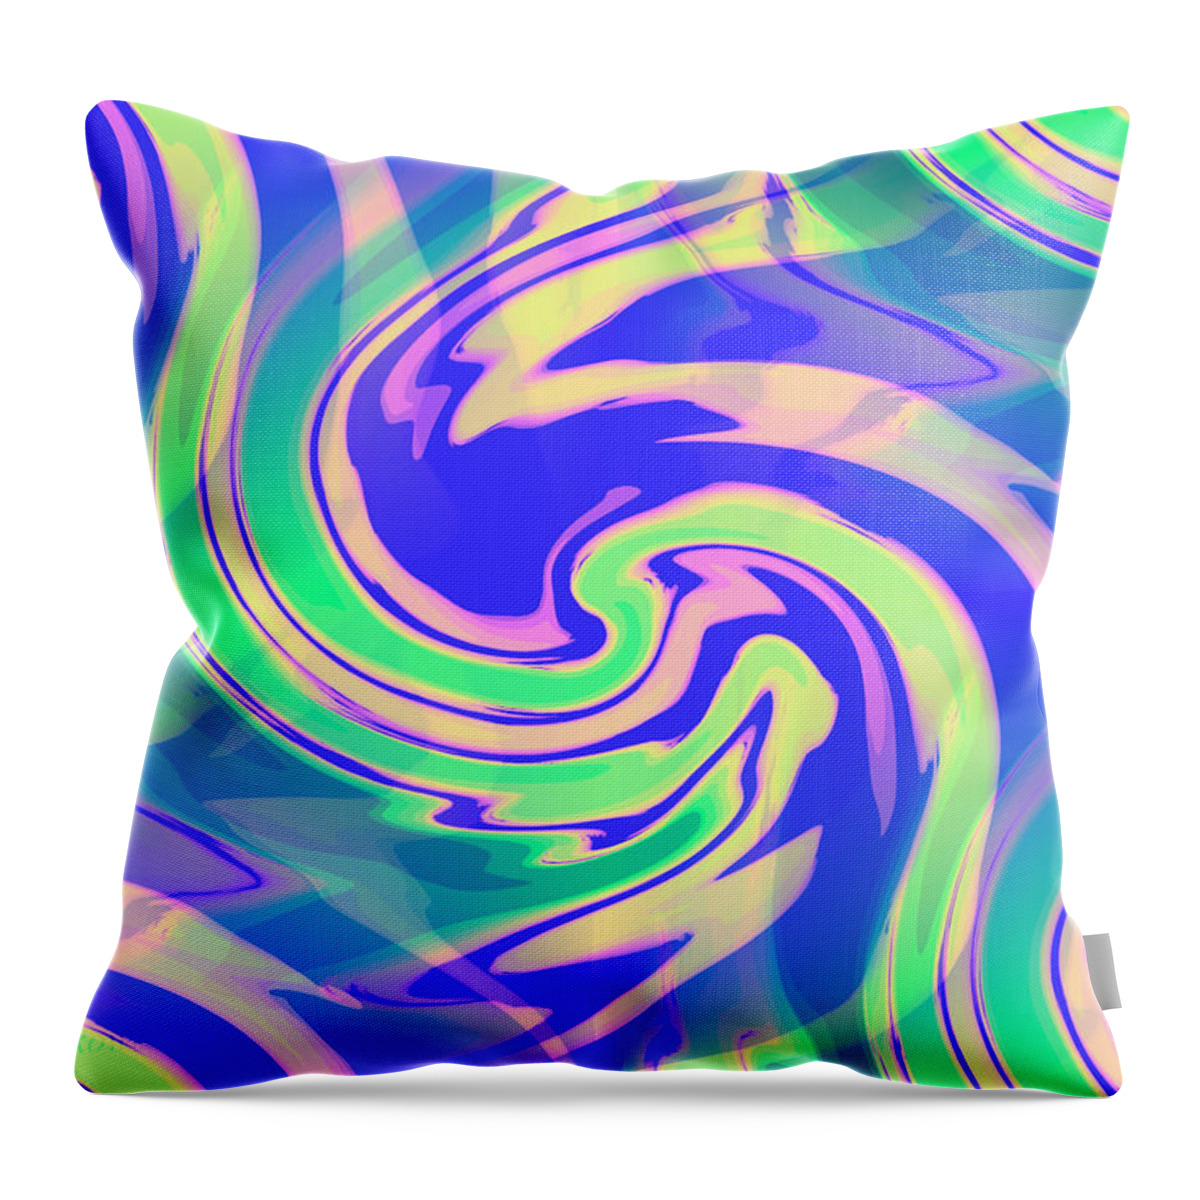 Sorbet Throw Pillow featuring the digital art Sorbet Dreams by Shana Rowe Jackson